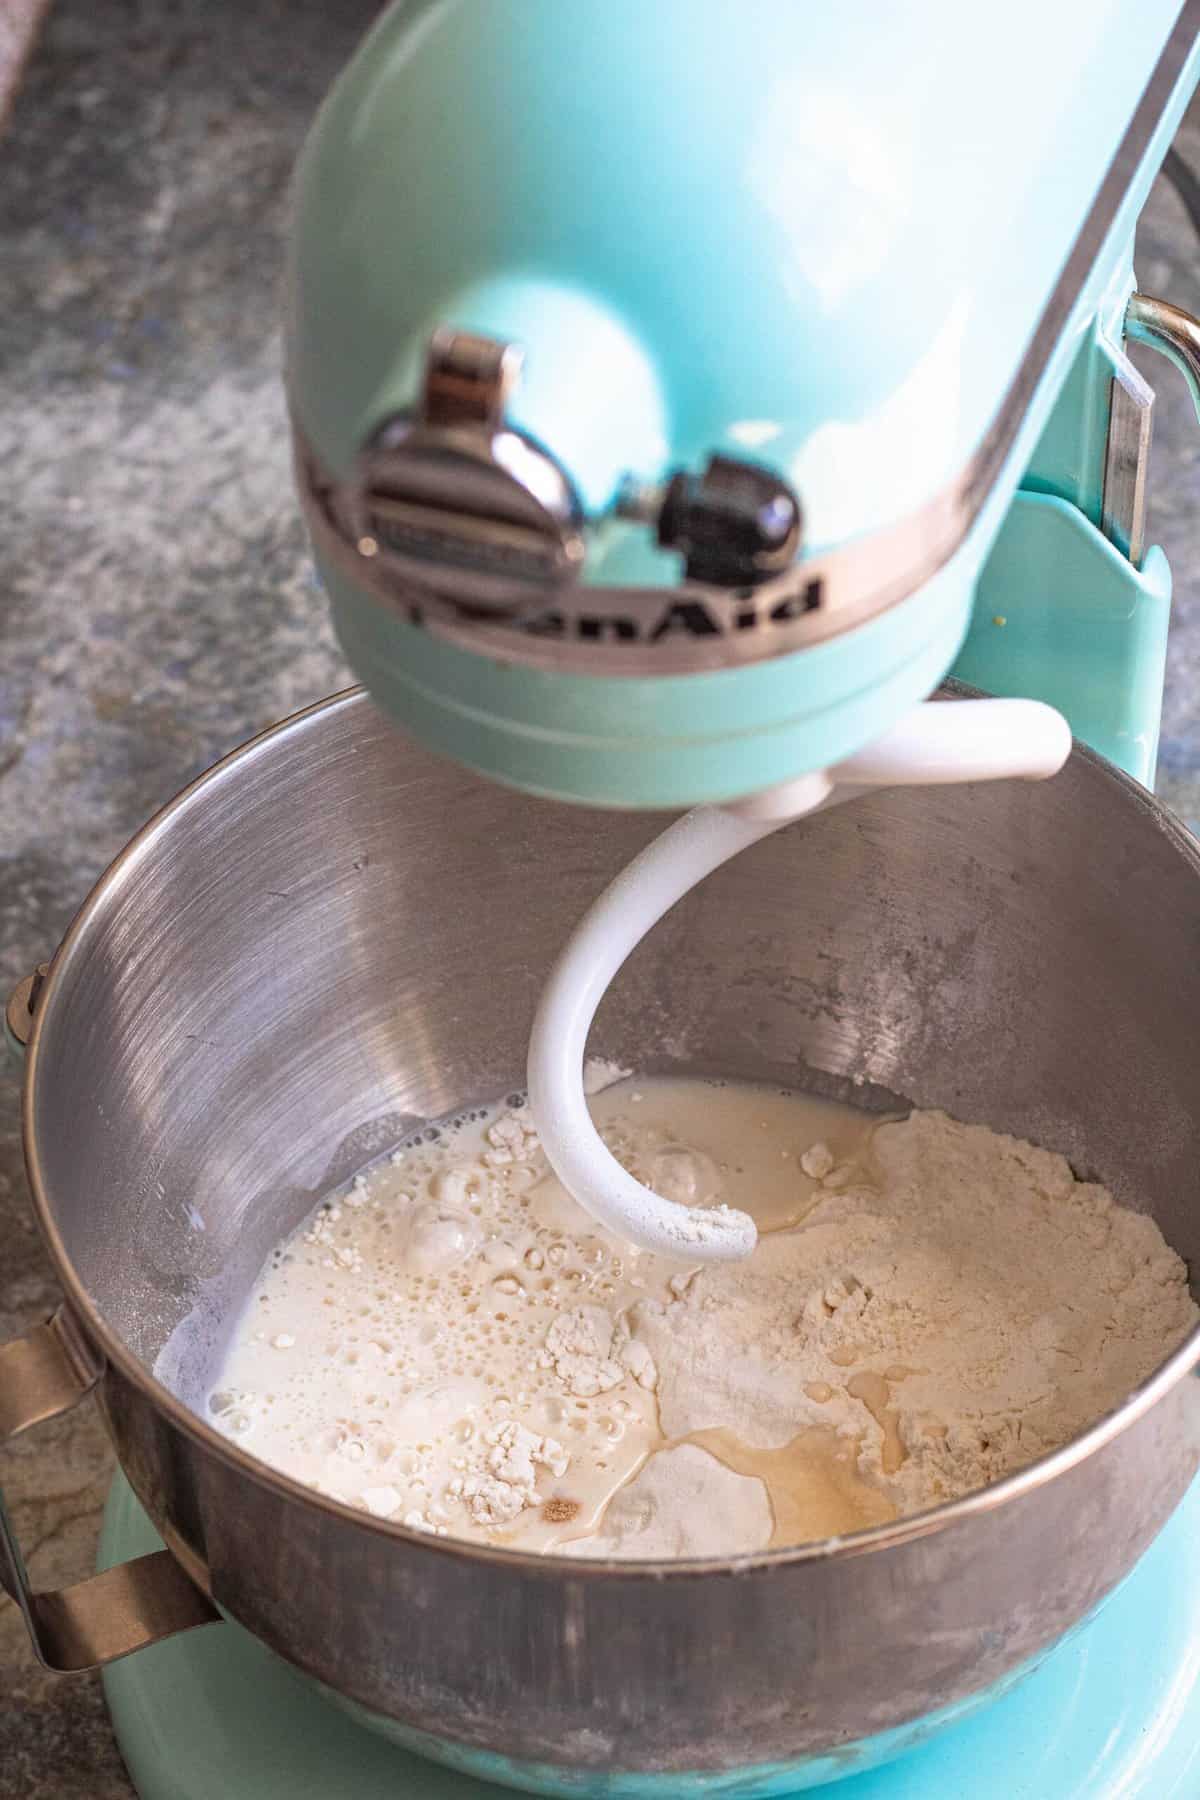 Kitchenaid Mixer combining dough to make the khachapuri. 